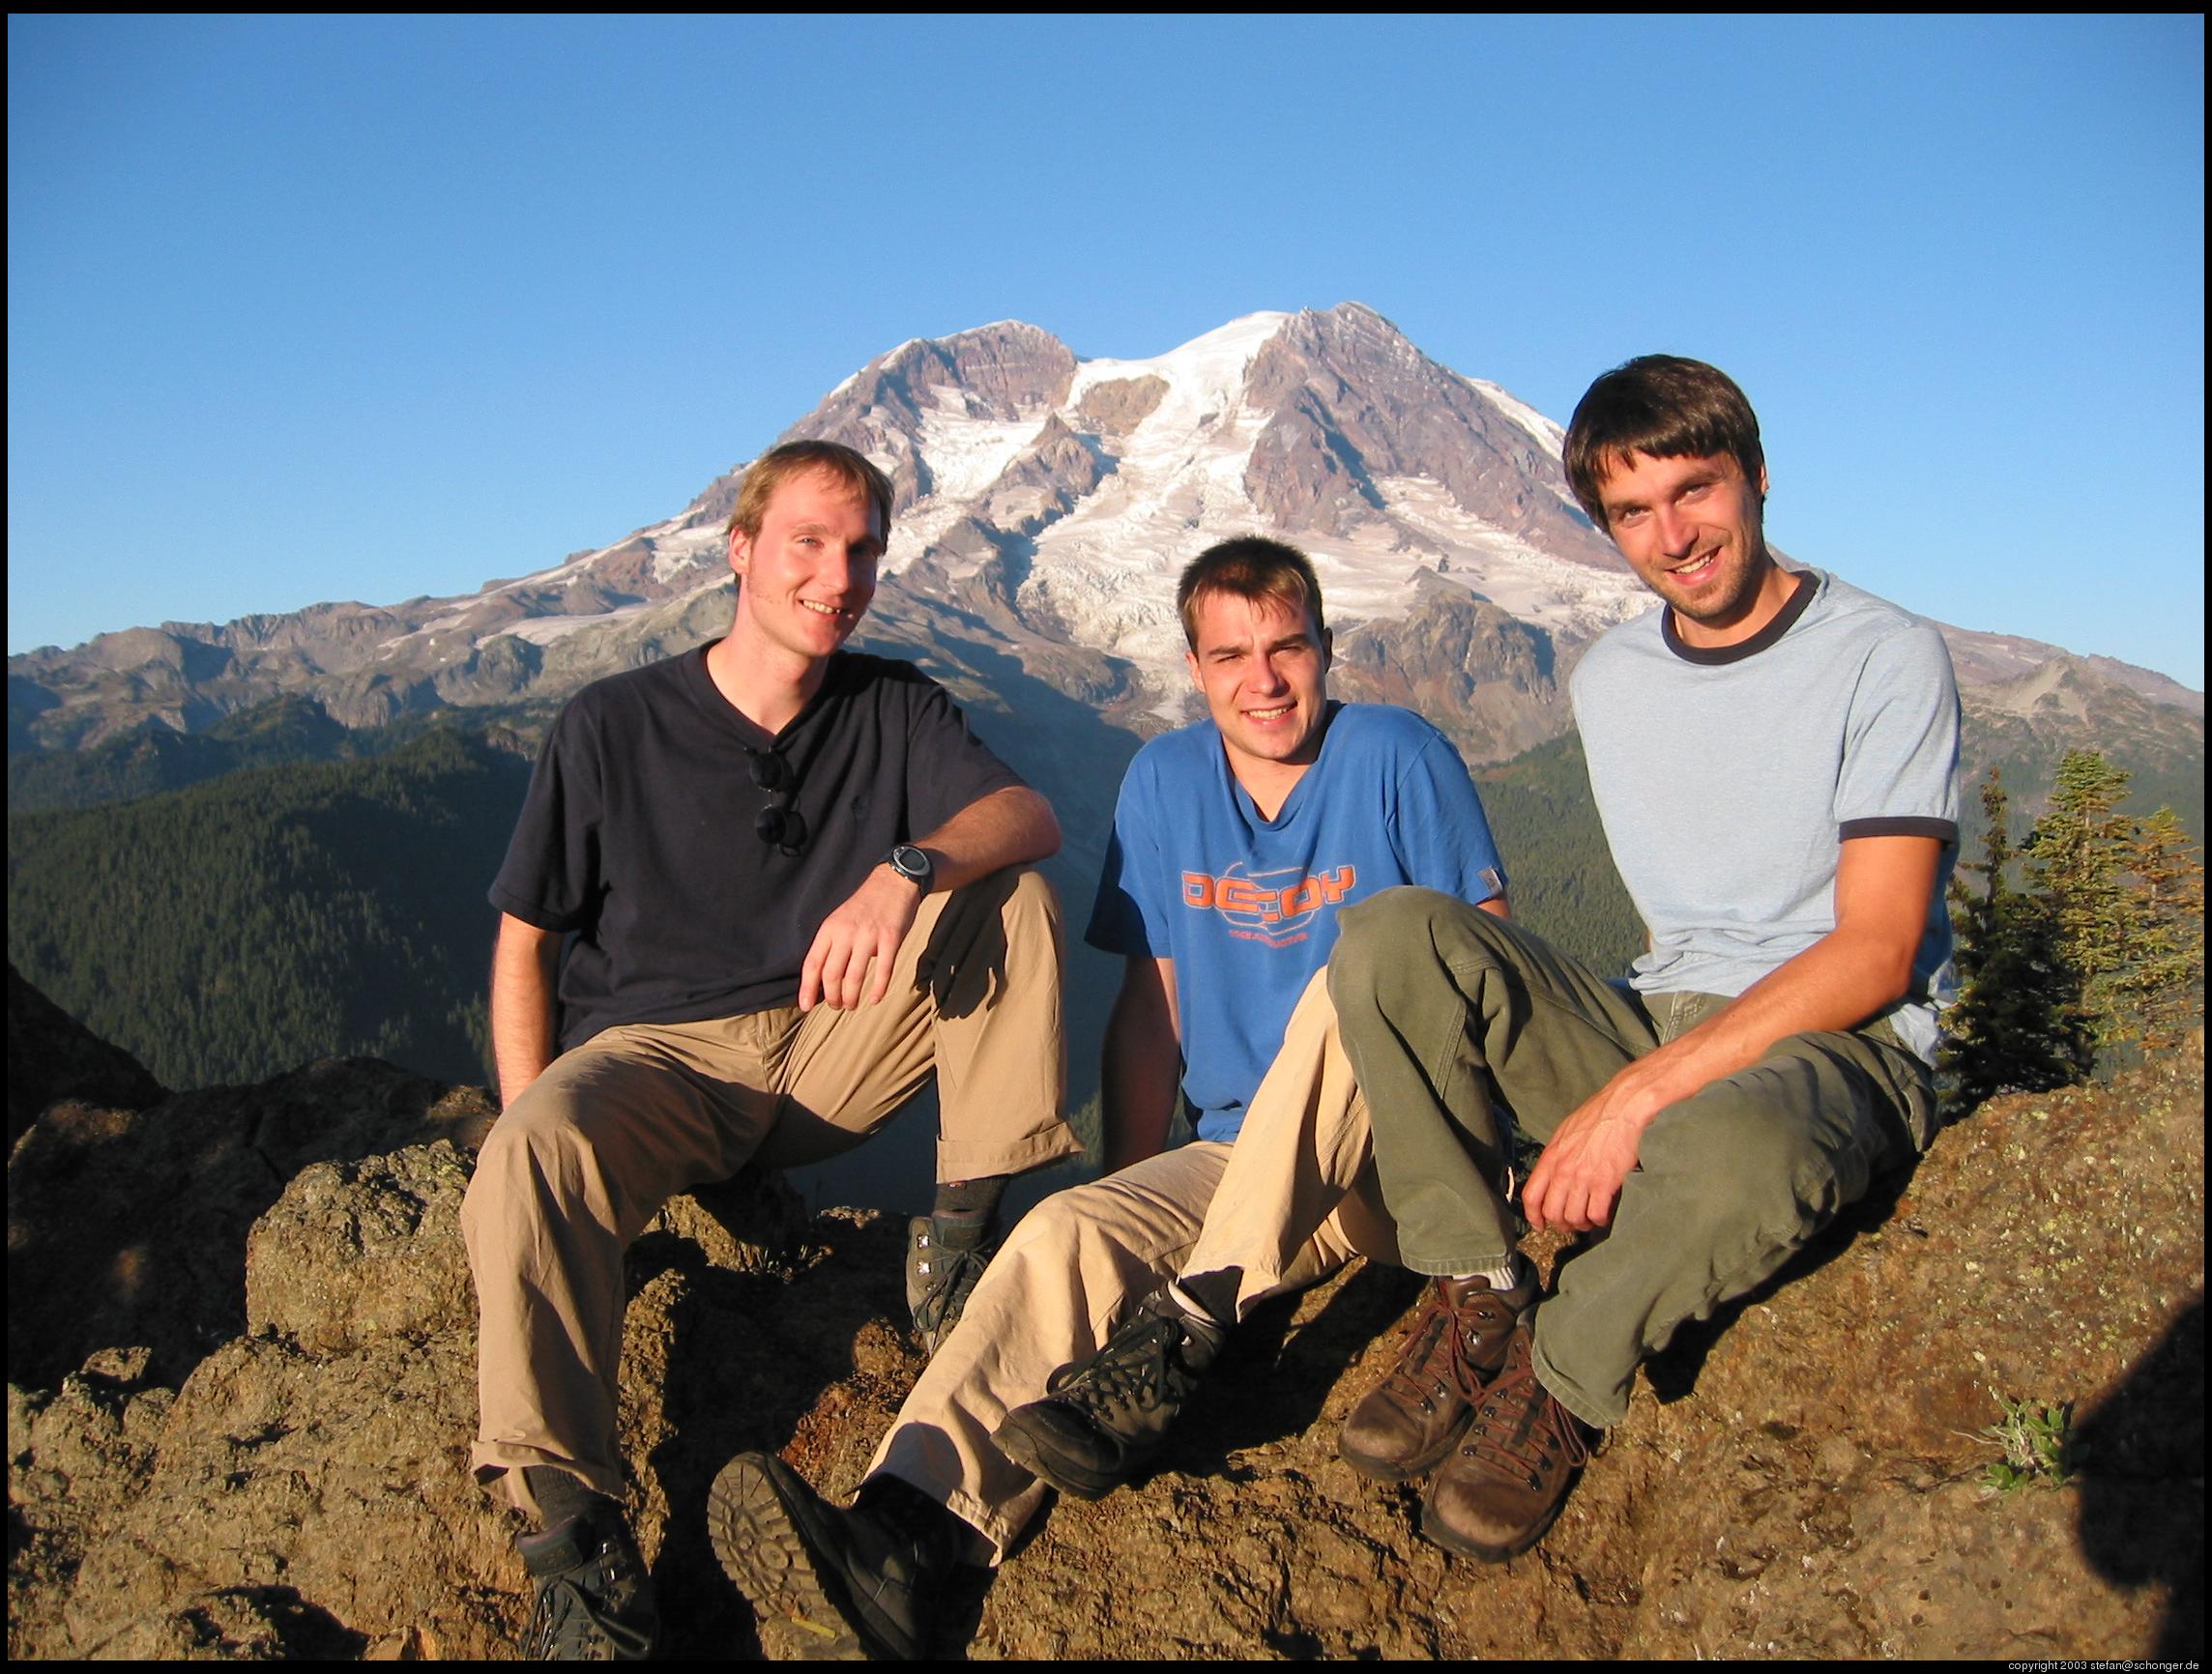 Group photo with Mt. Rainier